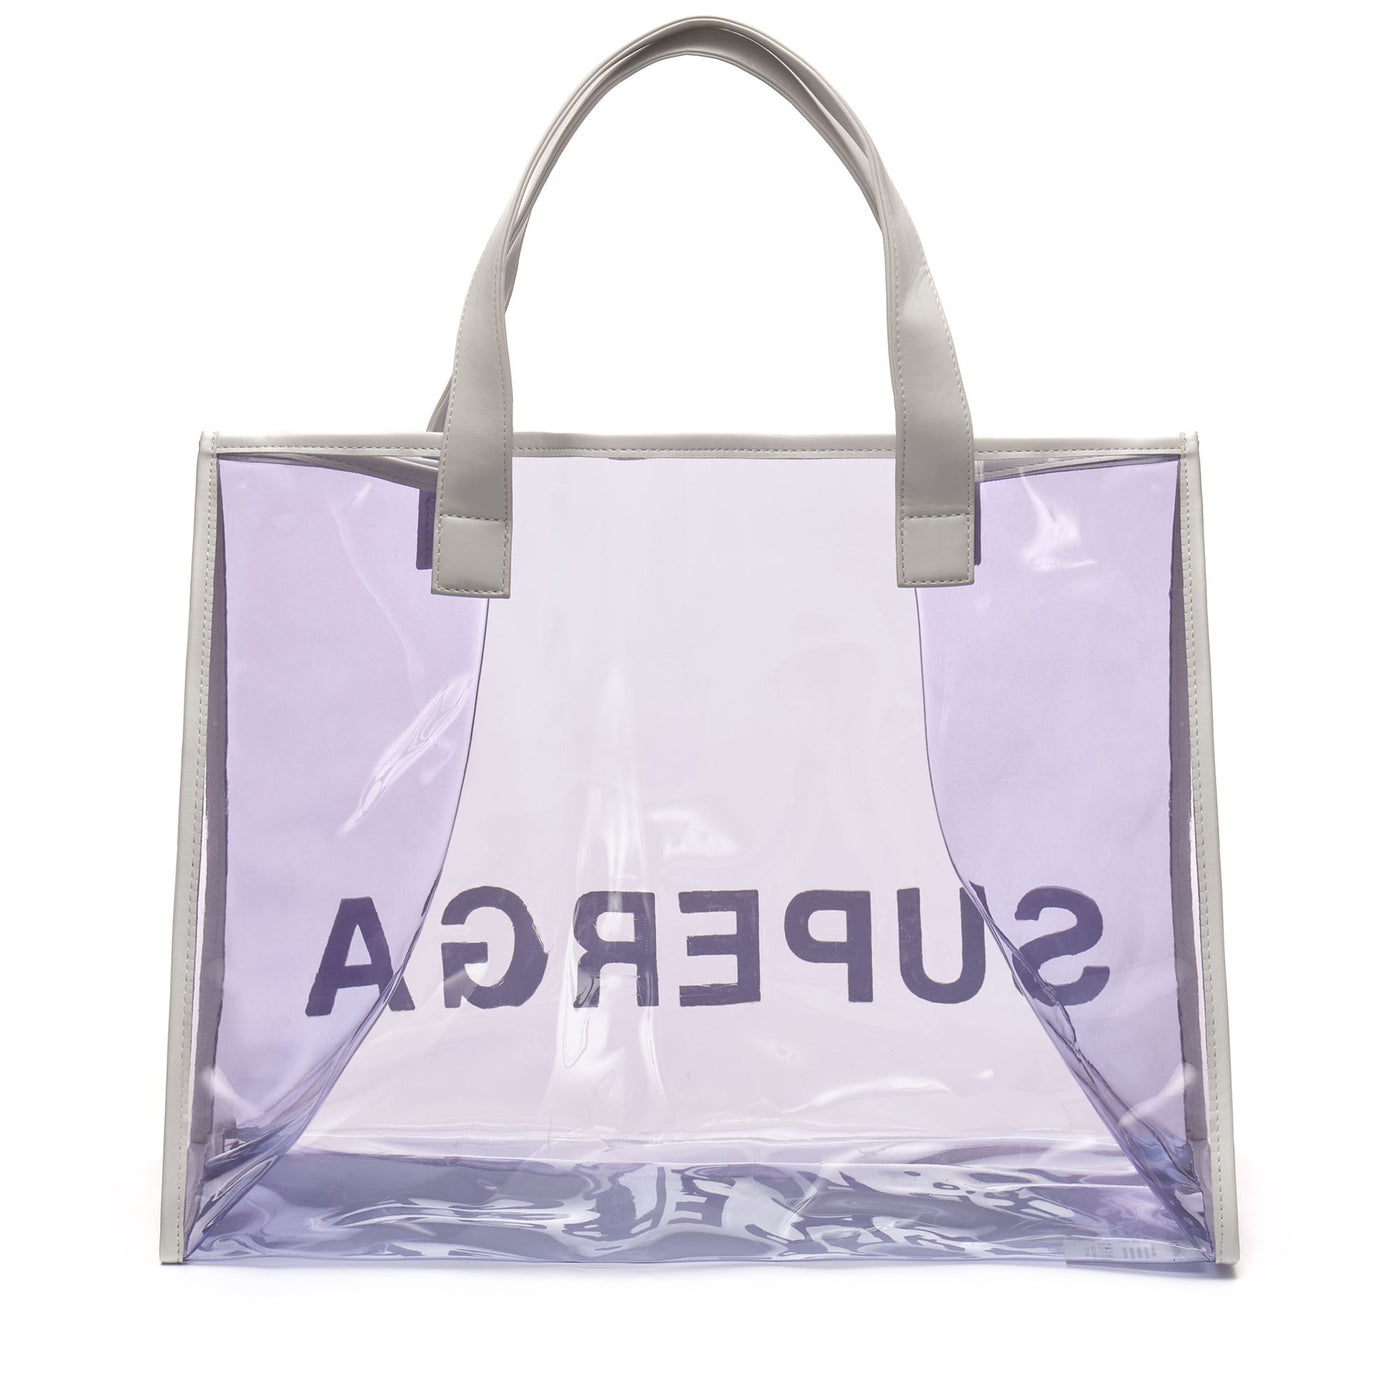 Bags Woman TRANSPARENT SHOPPING BAG Shopping Bag WHITE AVORIO-VIOLET LILLA Dressed Side (jpg Rgb)		